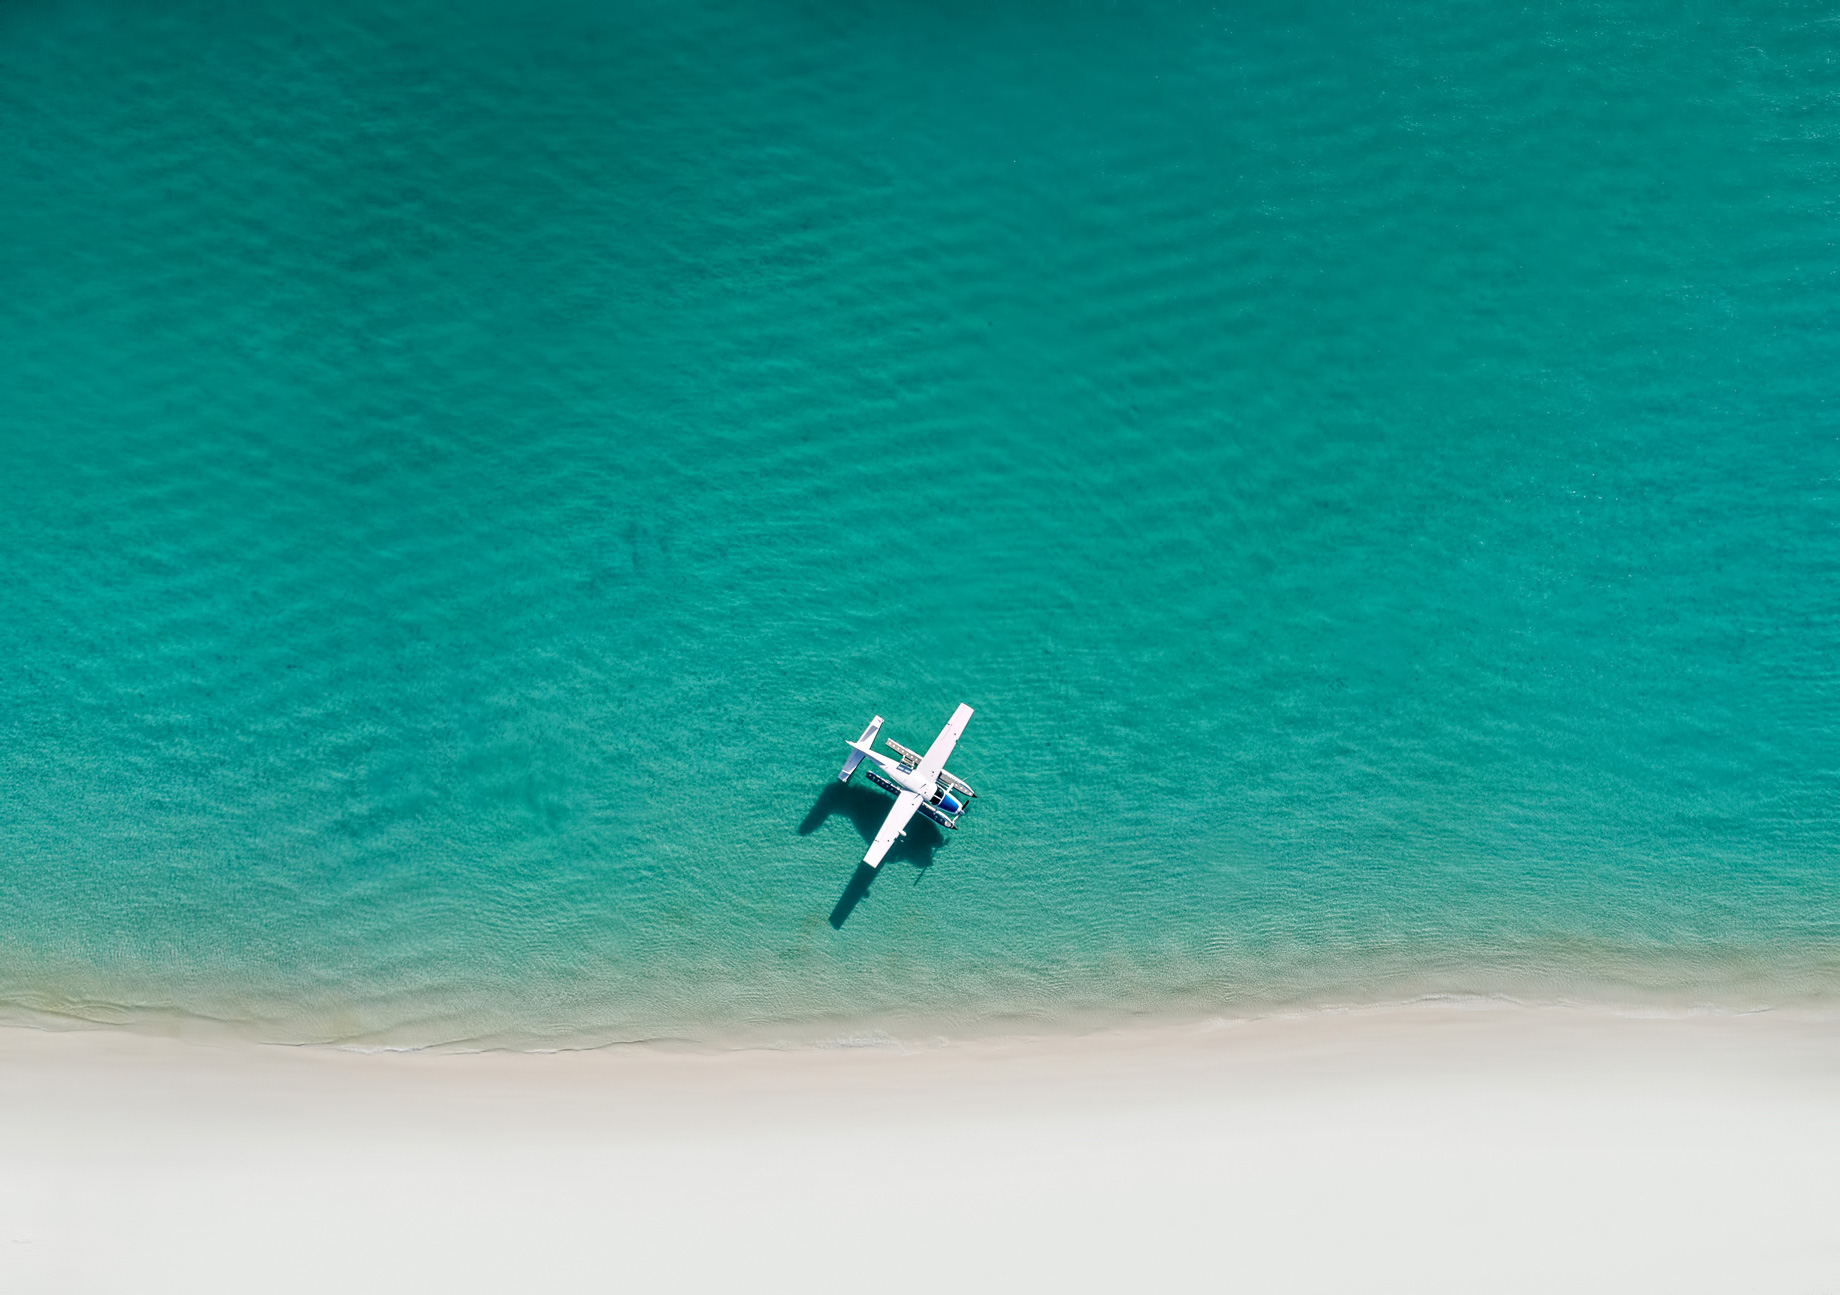 InterContinental Hayman Island Resort - Whitsunday Islands, Australia - Whitehaven Beach Float Plane